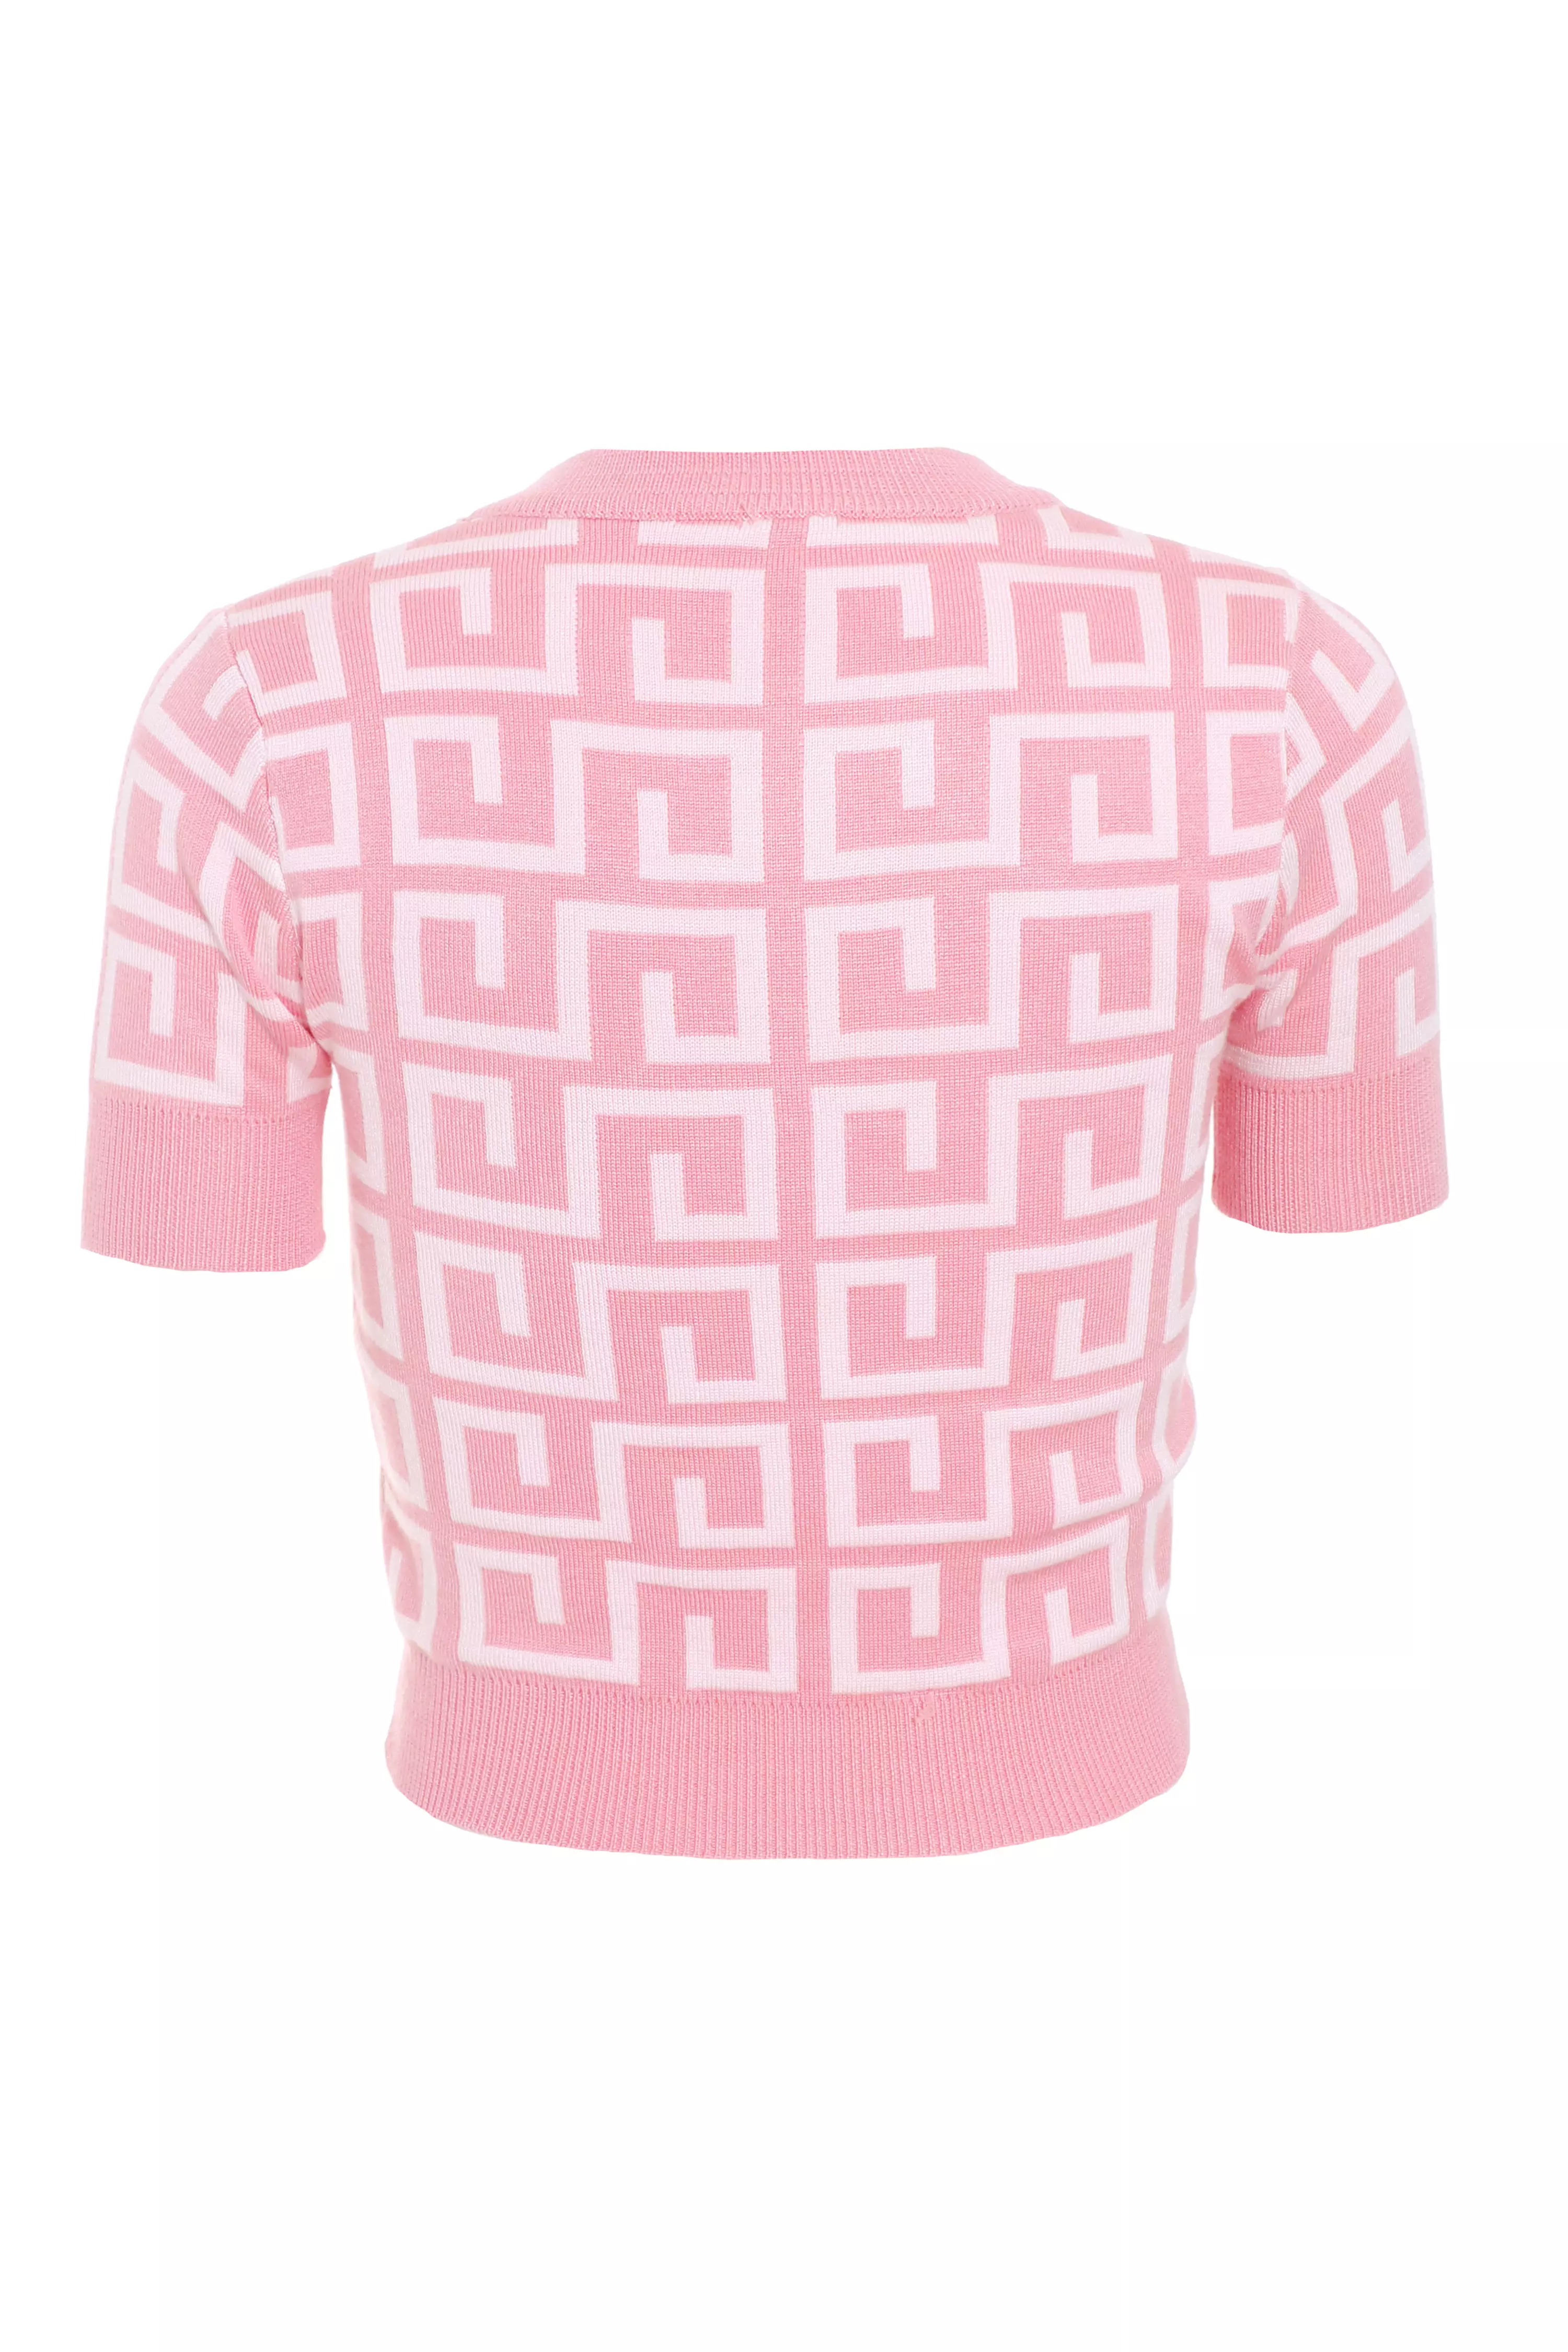 Pink Geometric Knit Top